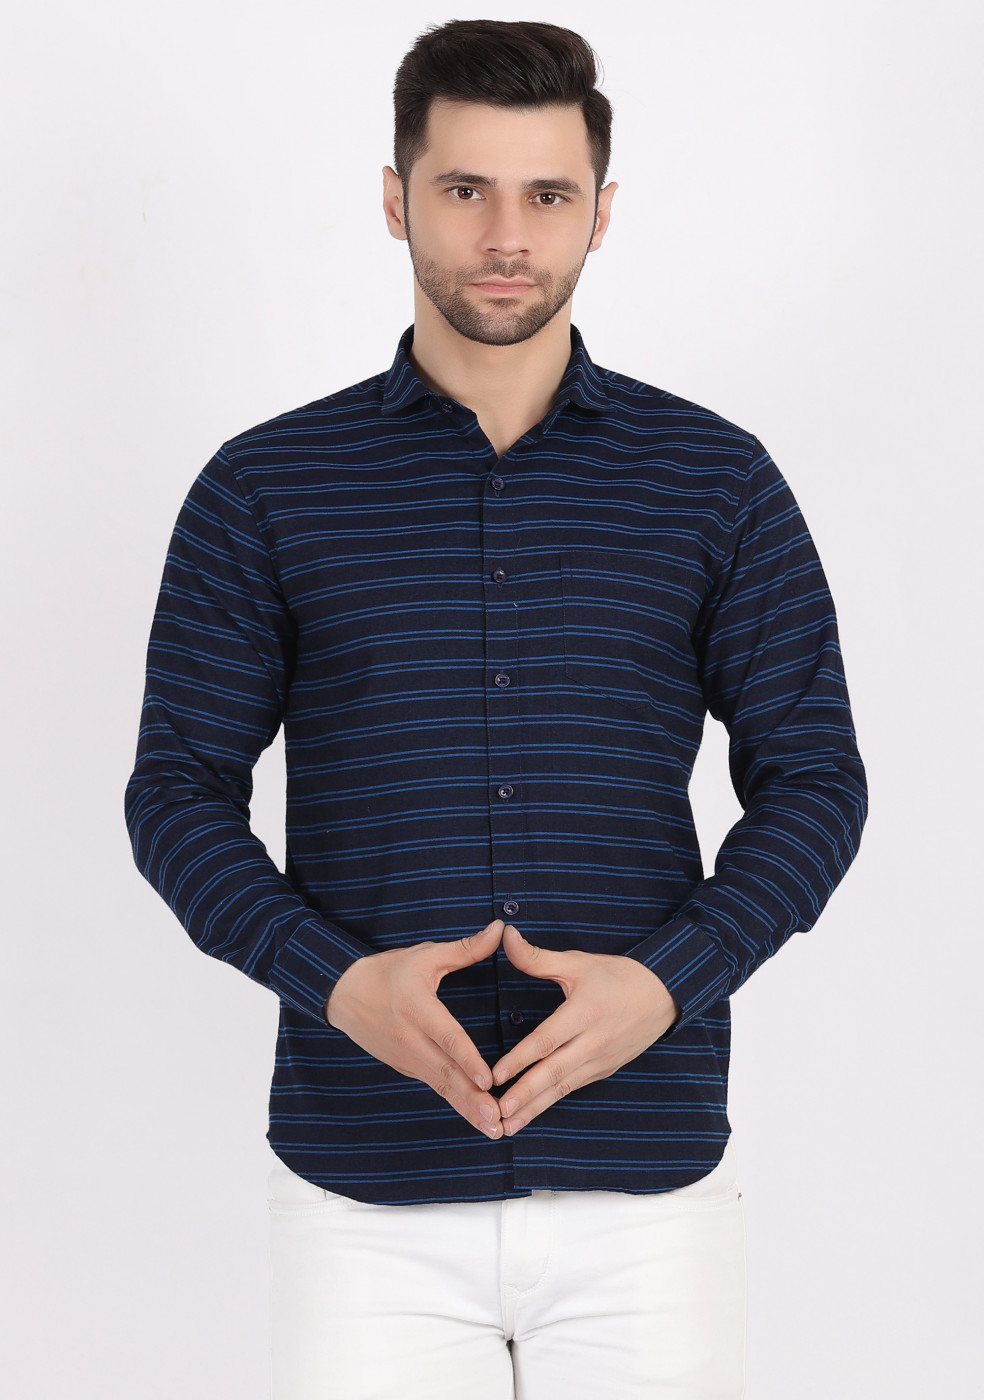 ASHTOM Men Navy & Blue Horizontal Striped Casual Shirt